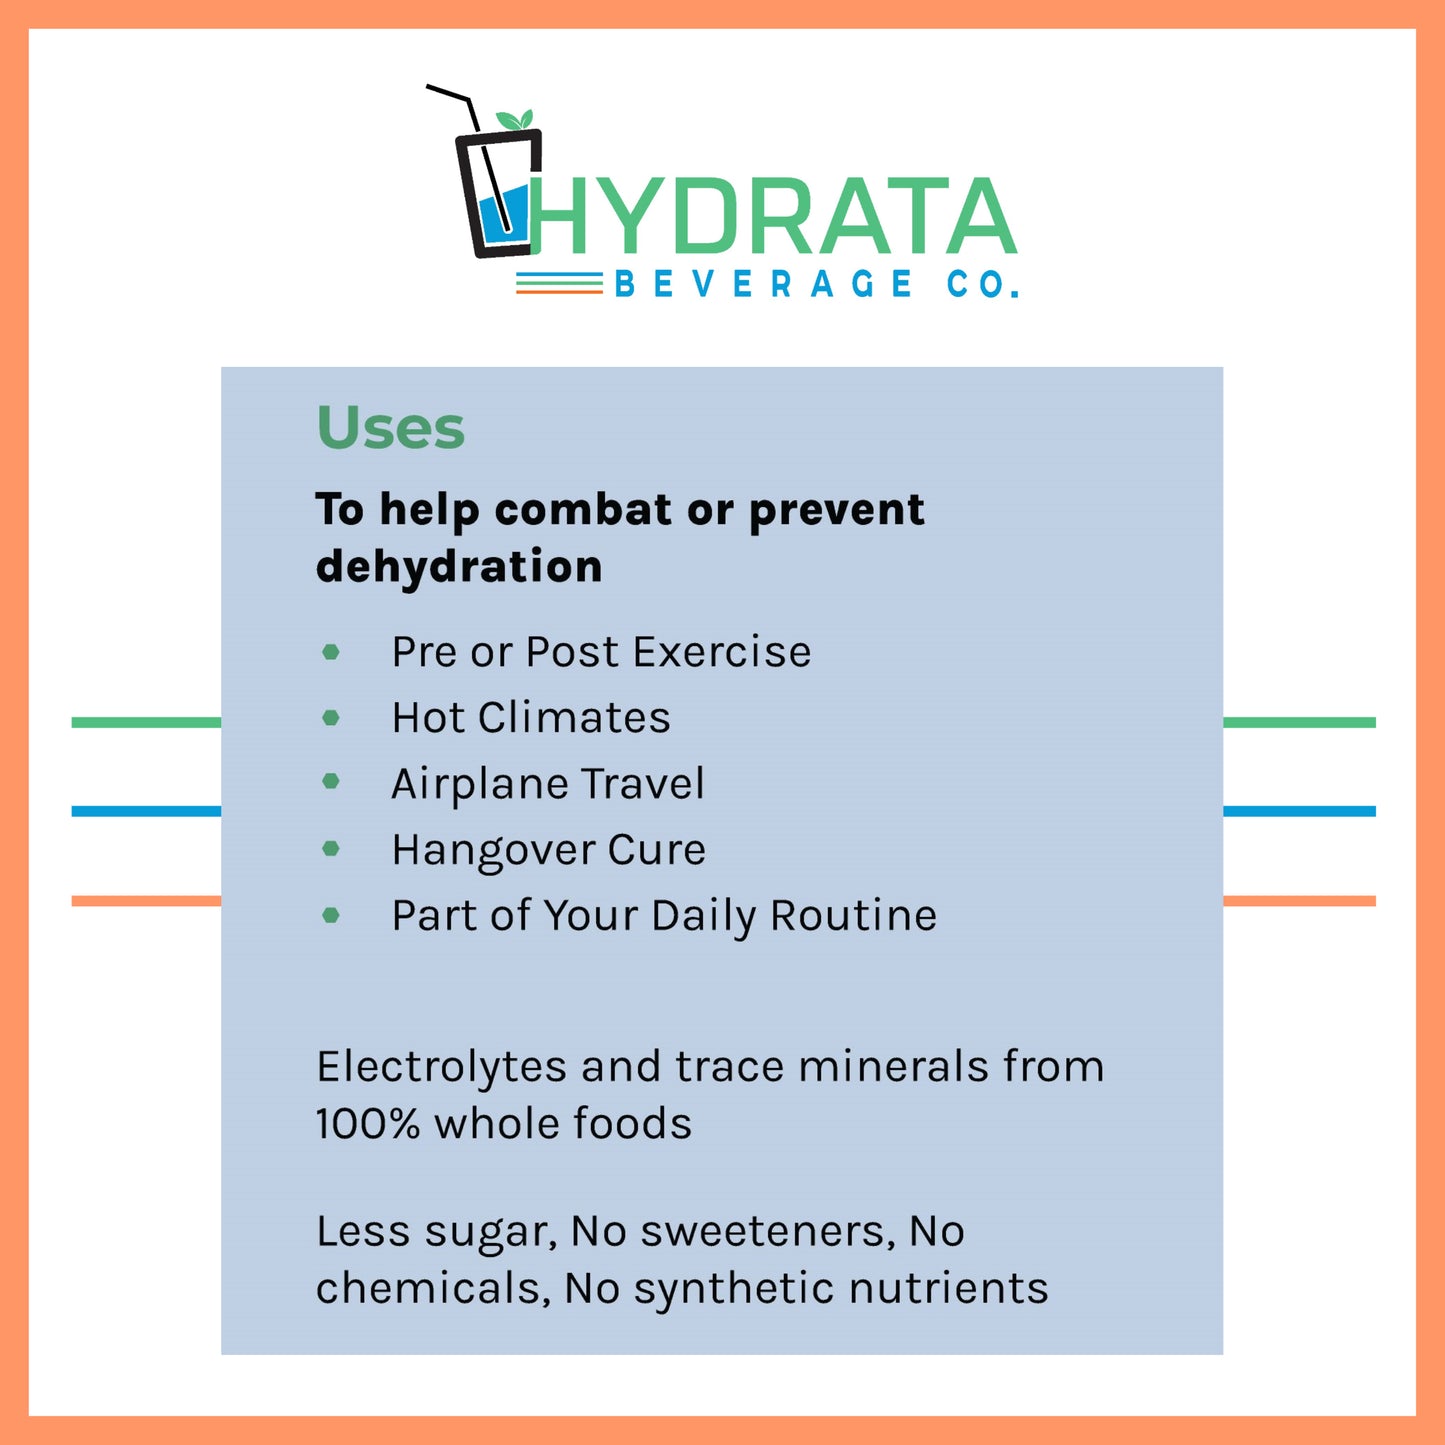 Hydrata Electrolyte Beverage Powder - Citrus Flavor